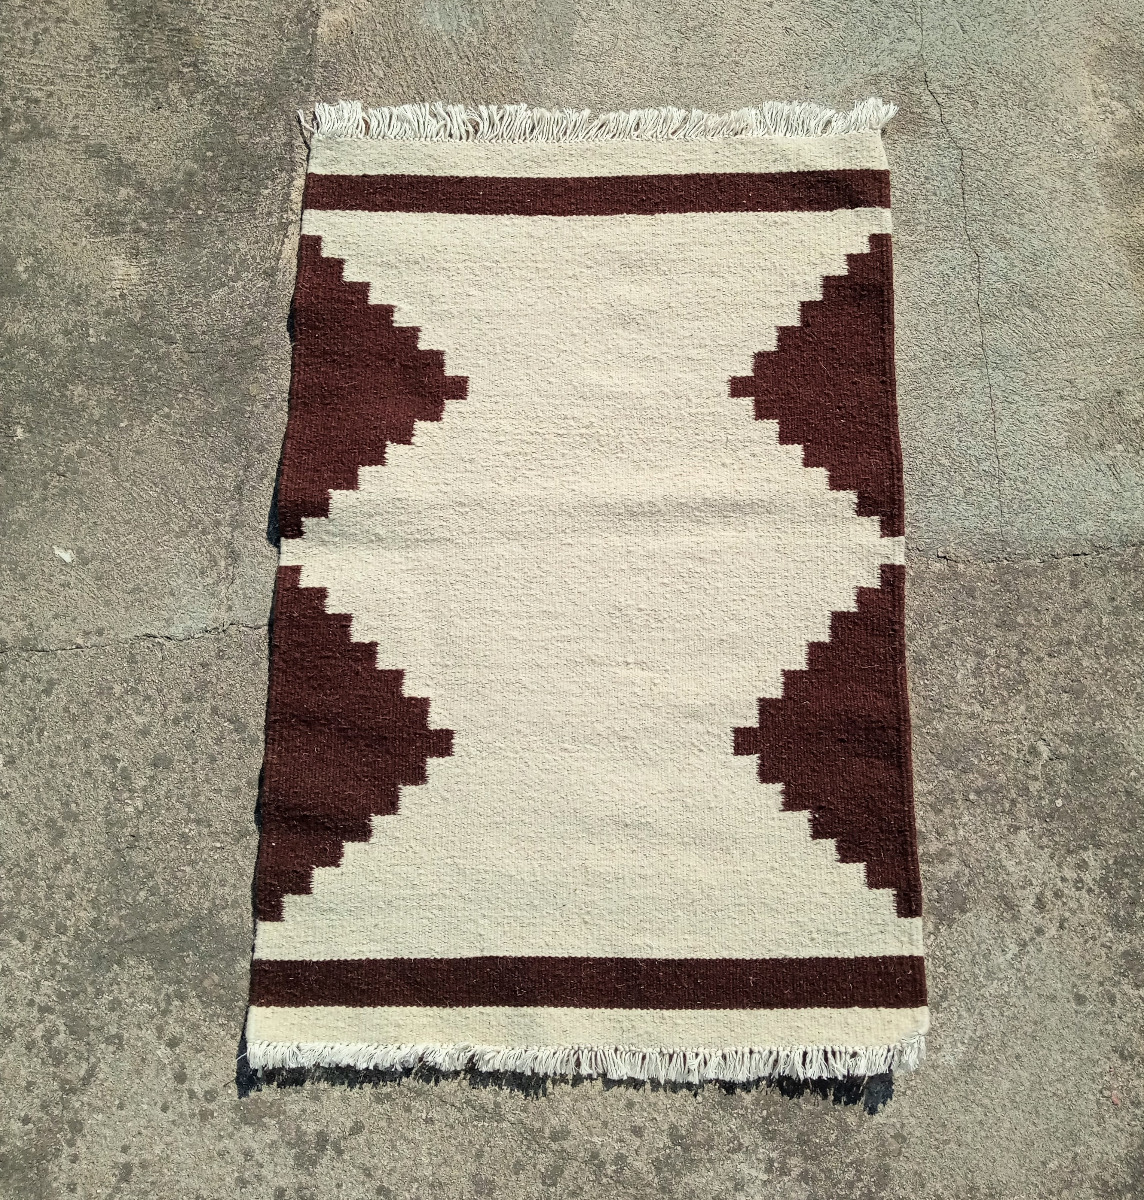 qartaj small geometric triangle amazigh kilim rug dark brown white 